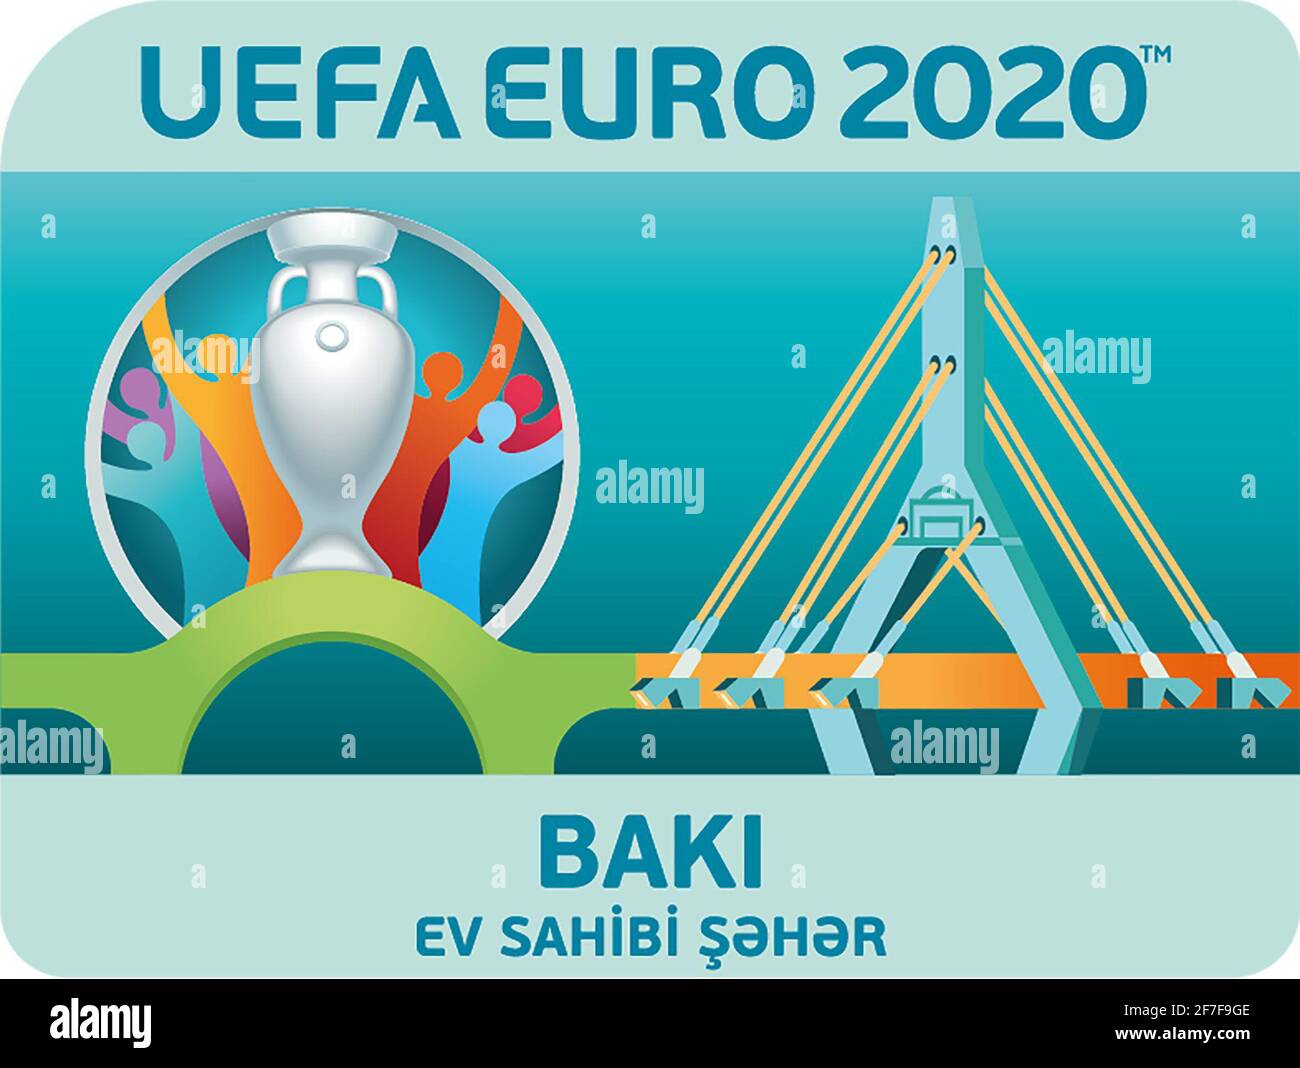 UEFA EURO 2020 Logo Host City Baku Stock Photo